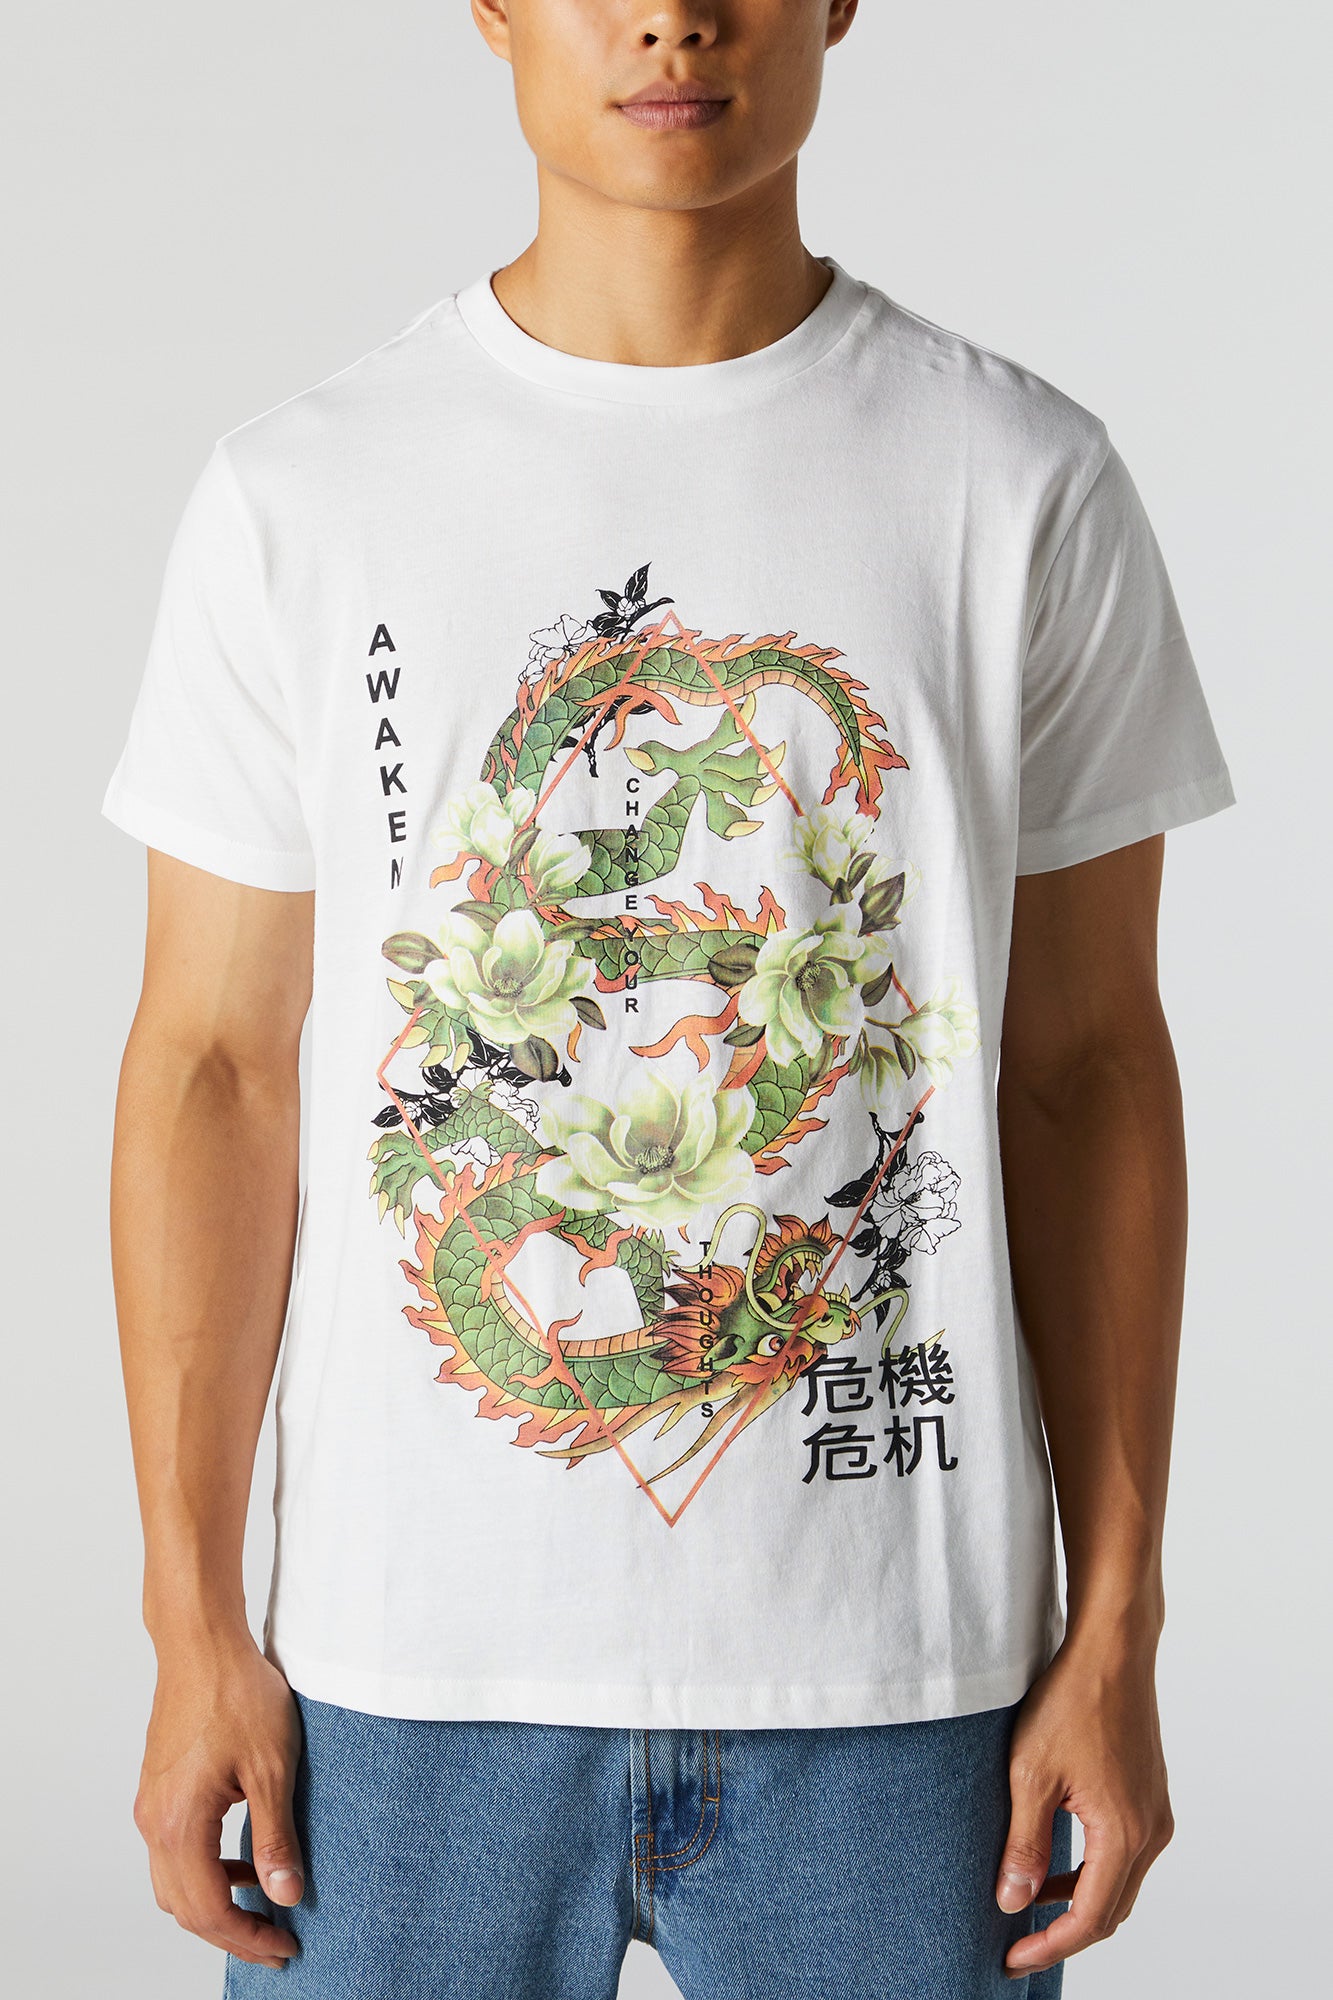 Awaken the Dragon Graphic T-Shirt